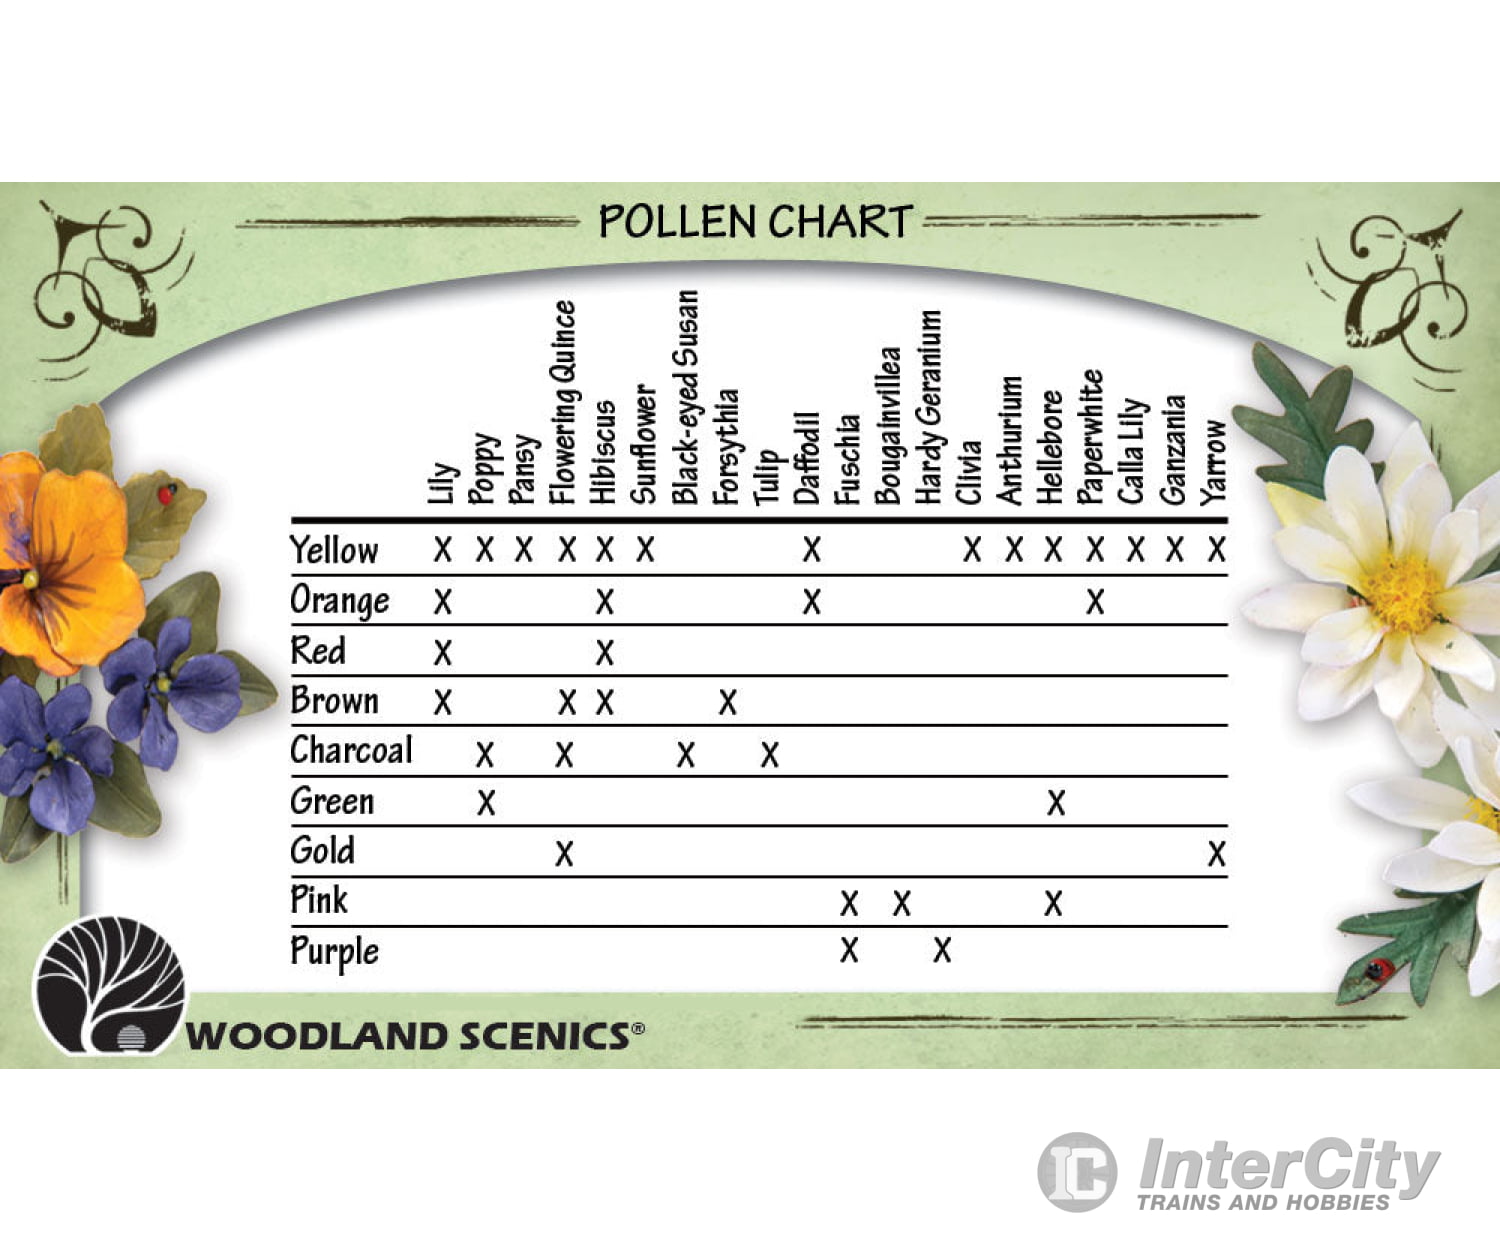 Woodland Scenics 4643 Paper Flower Pollen - 1.8 Cu In. 29.4 Cm. Gold Flock & Turf